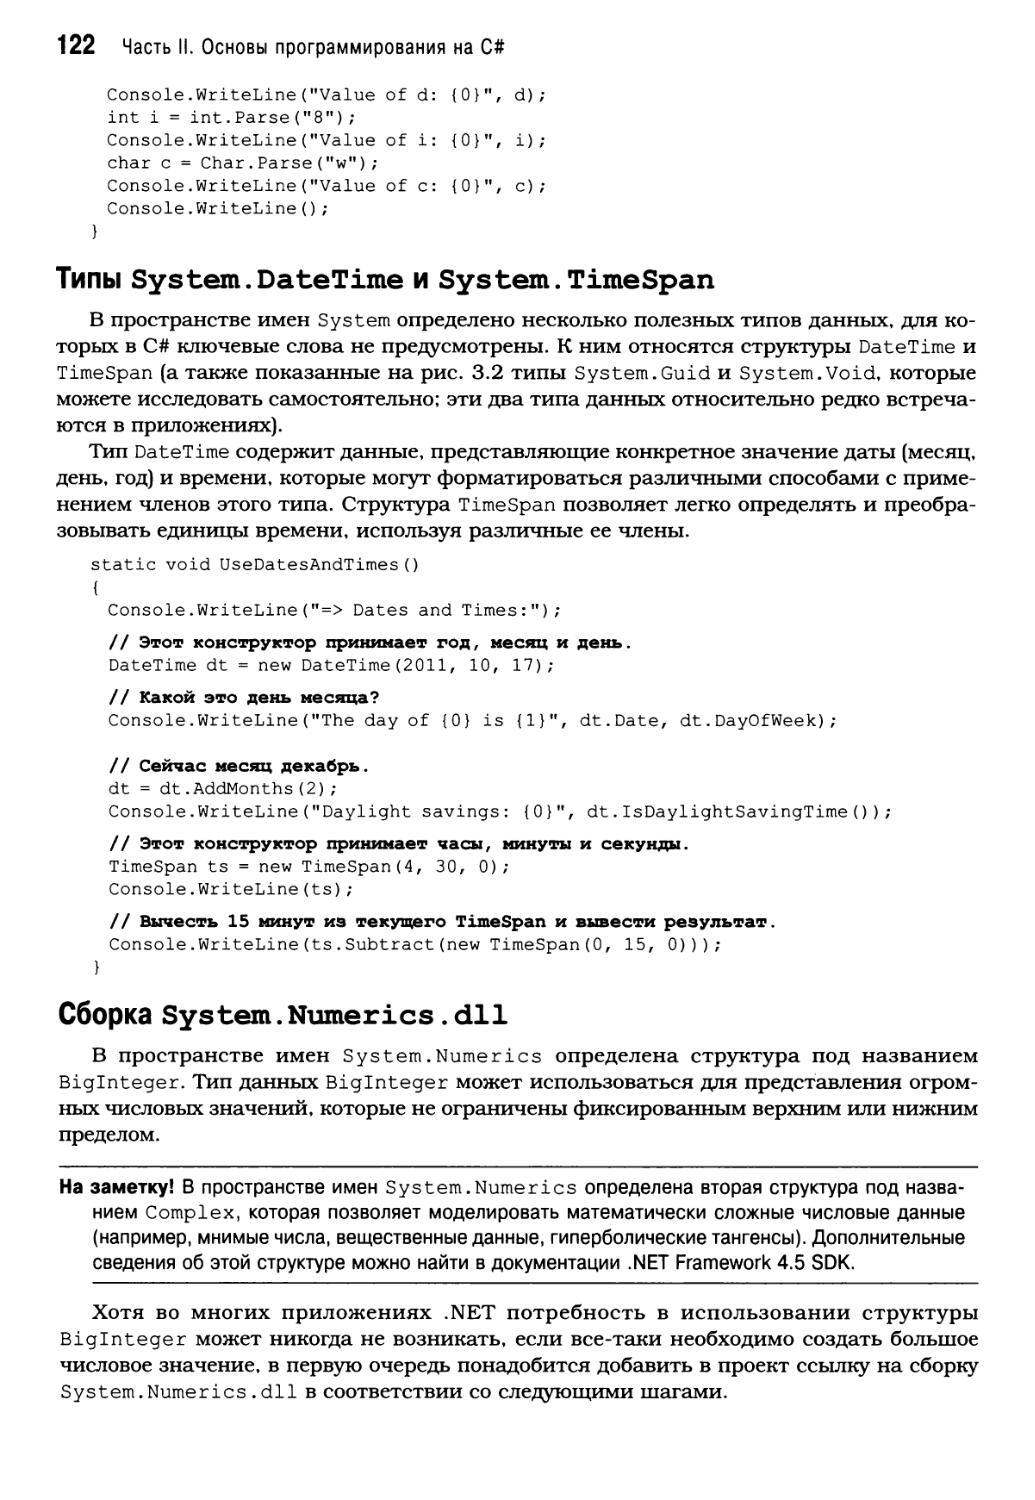 Типы System.DateTime и System.TimeSpan
Сборка System.Numerics.dll